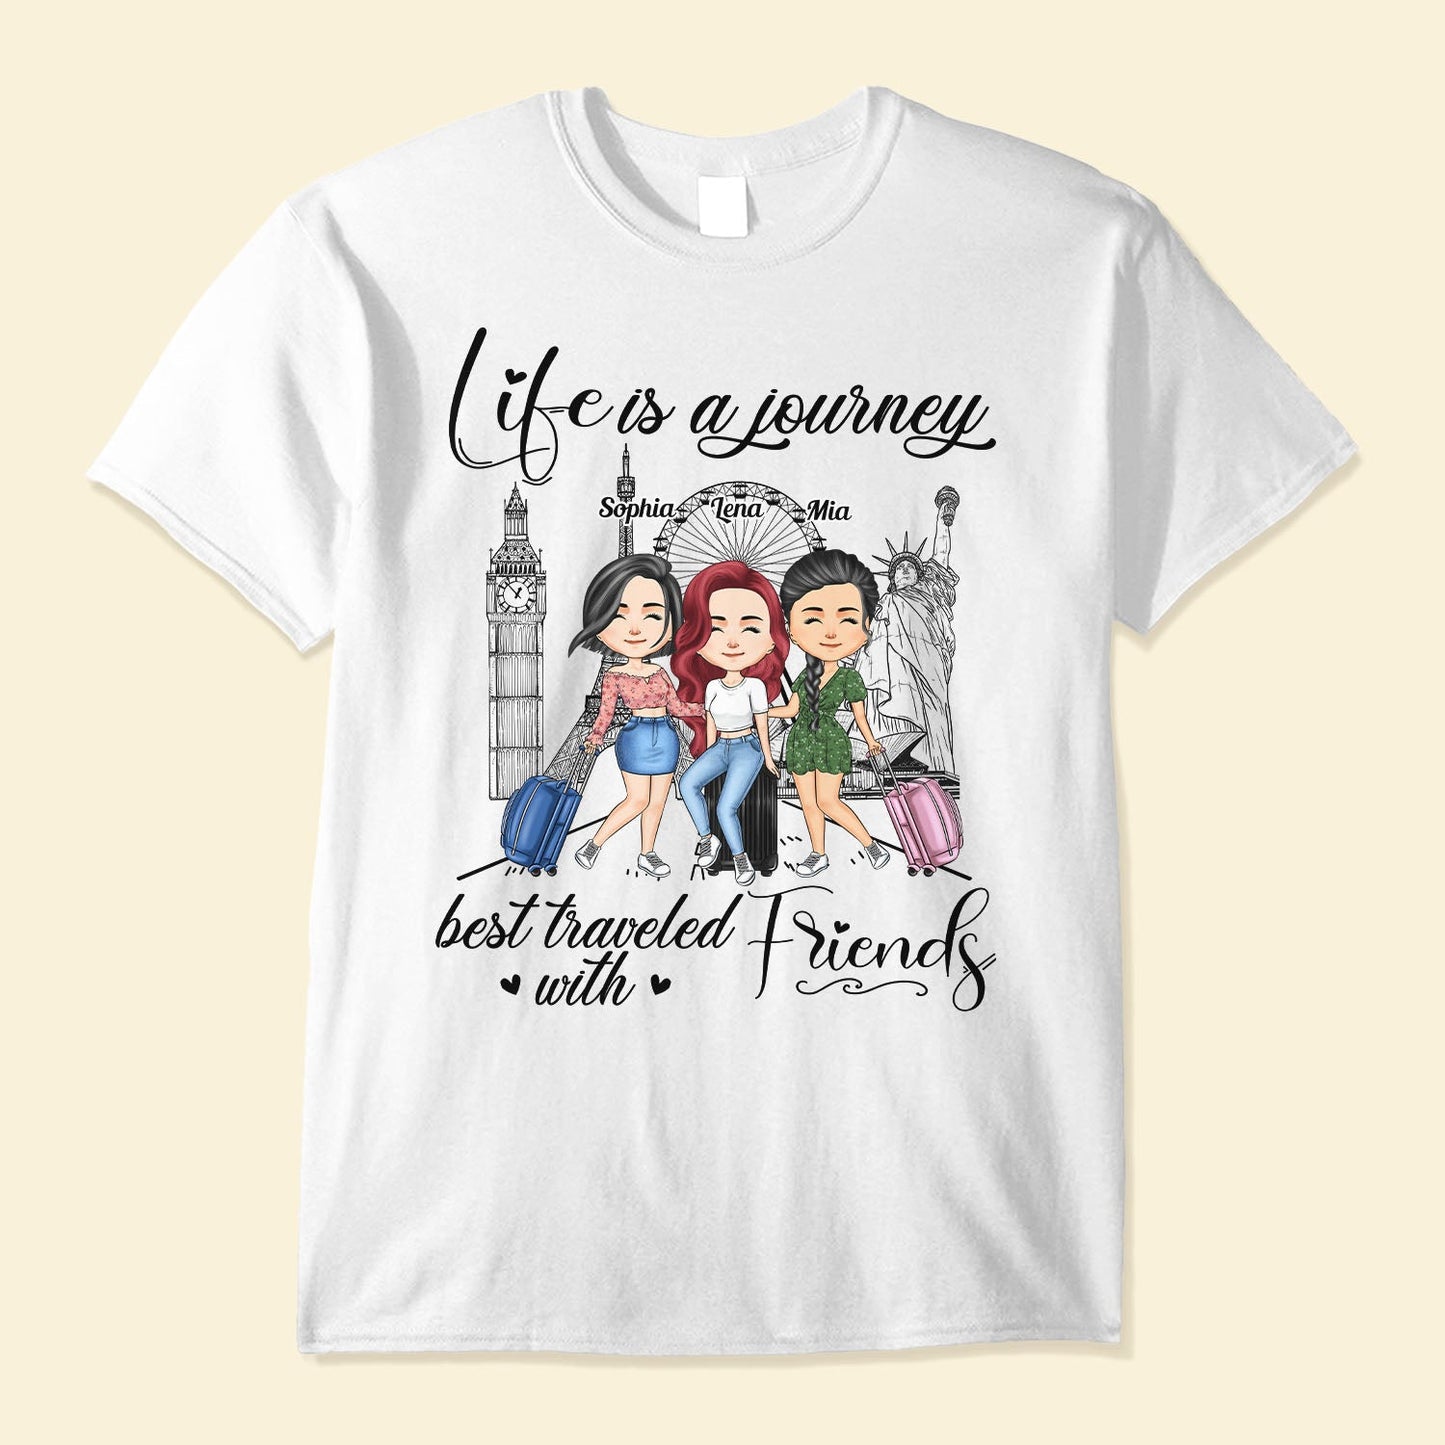 Life Is Better With Friends T-shirt, Official Friends Merchandise